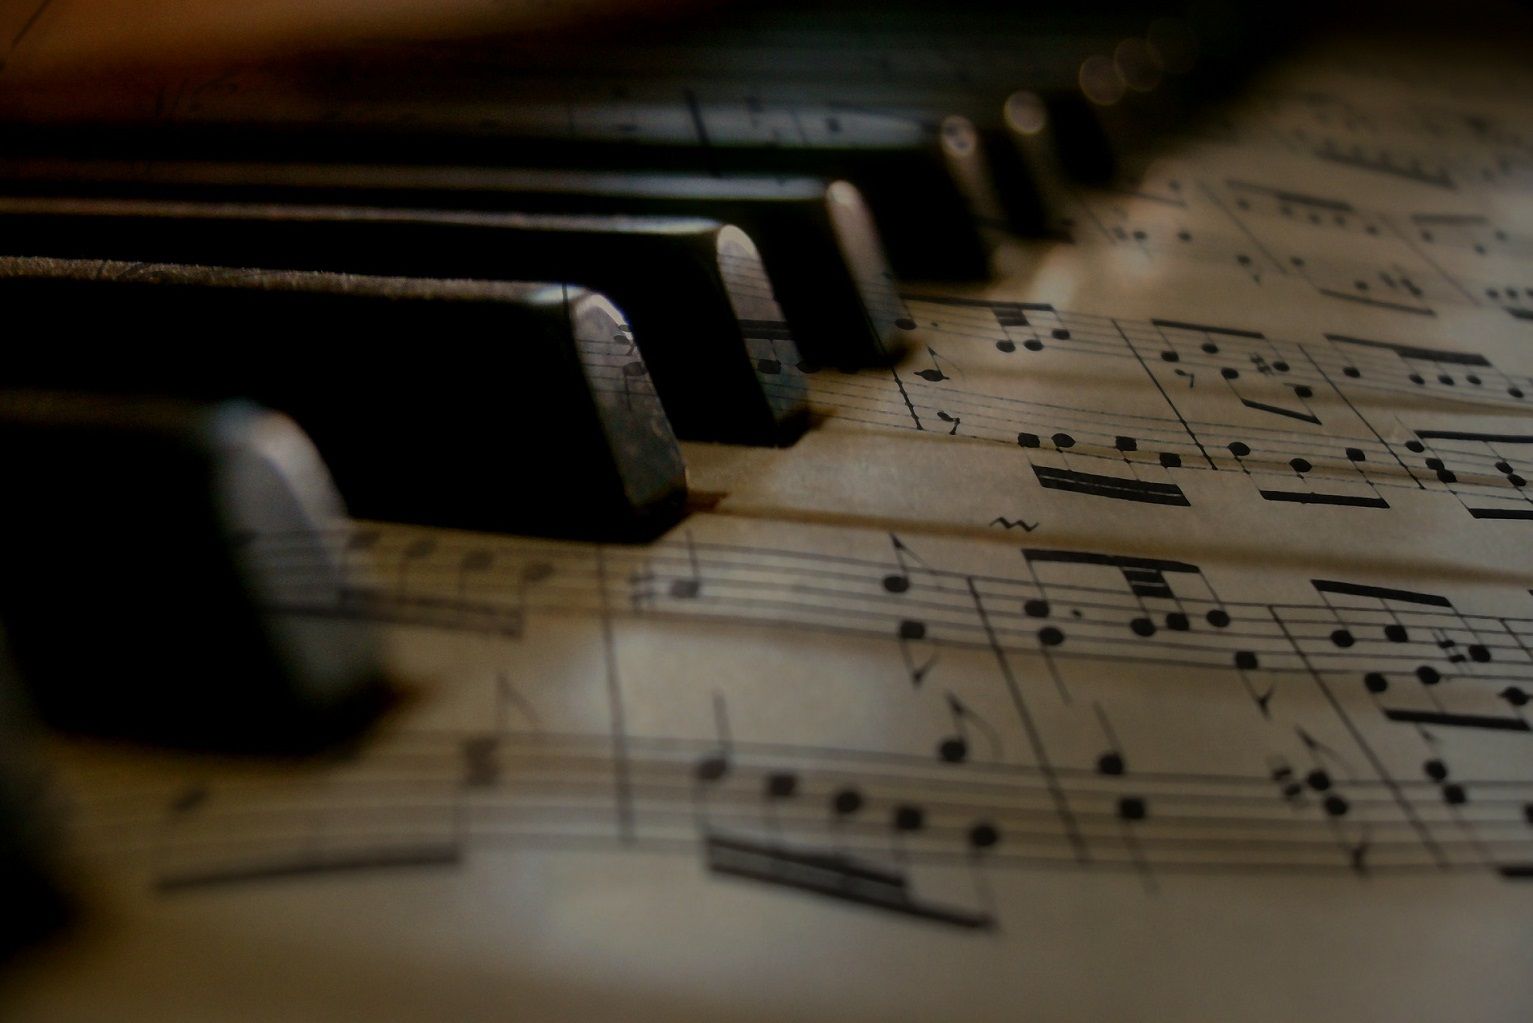 piano keys with sheet music overlaid on keys